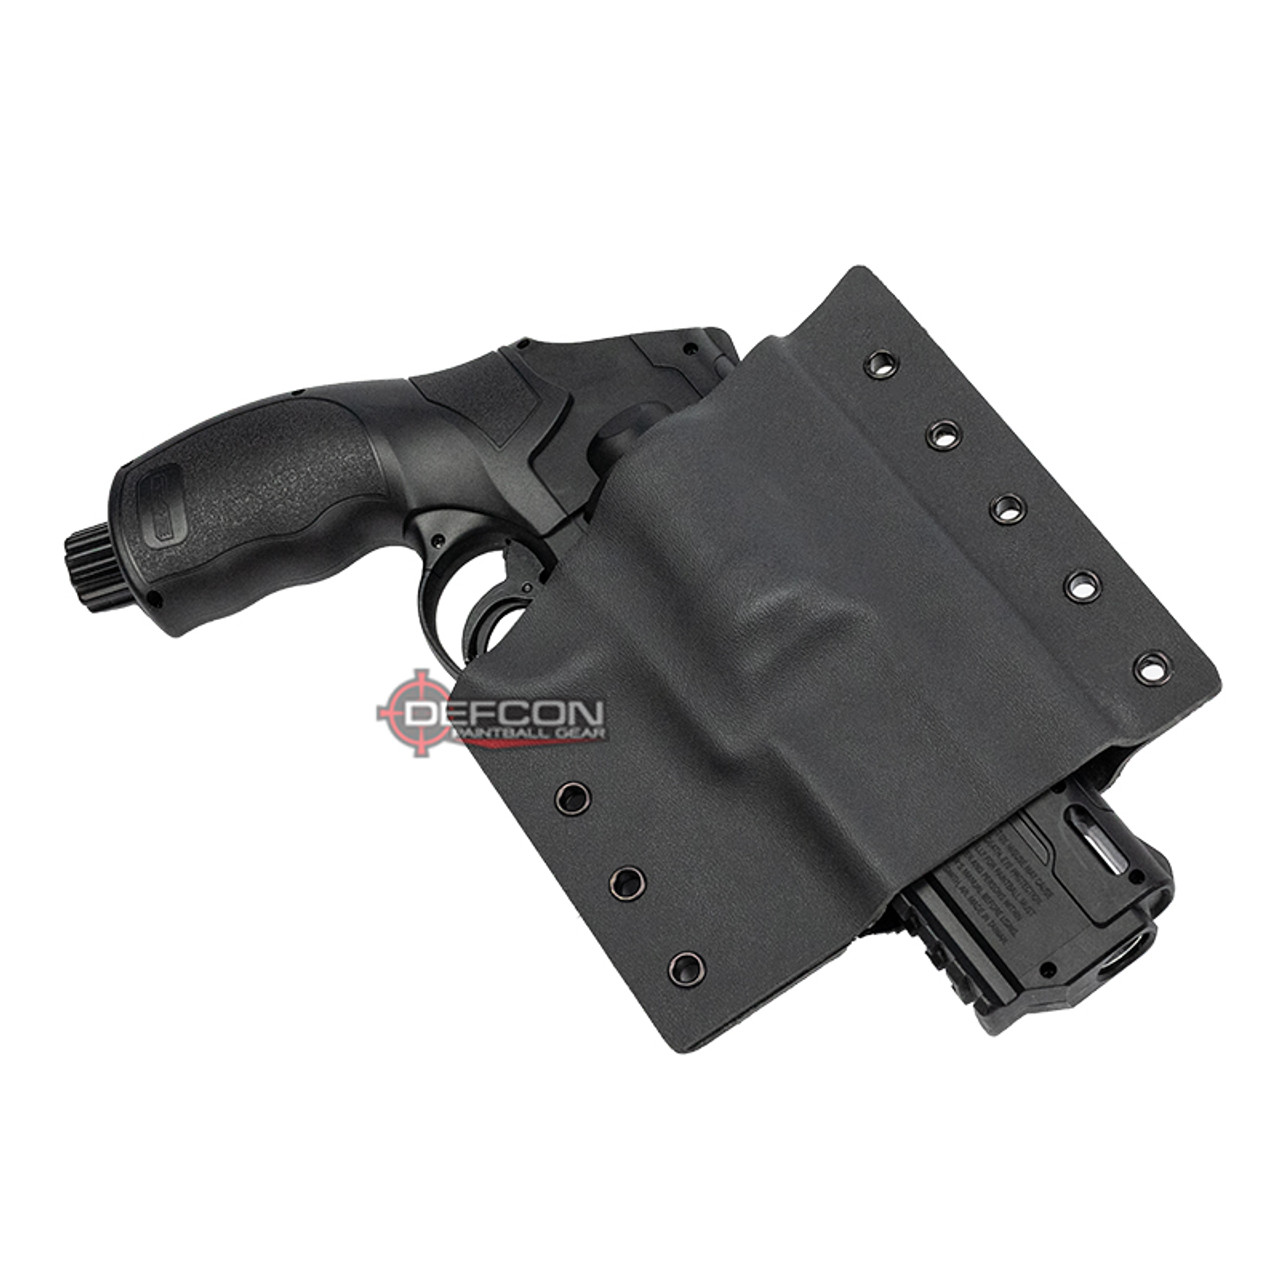 Kydex Holster For Umarex HDR50 Revolver - Black